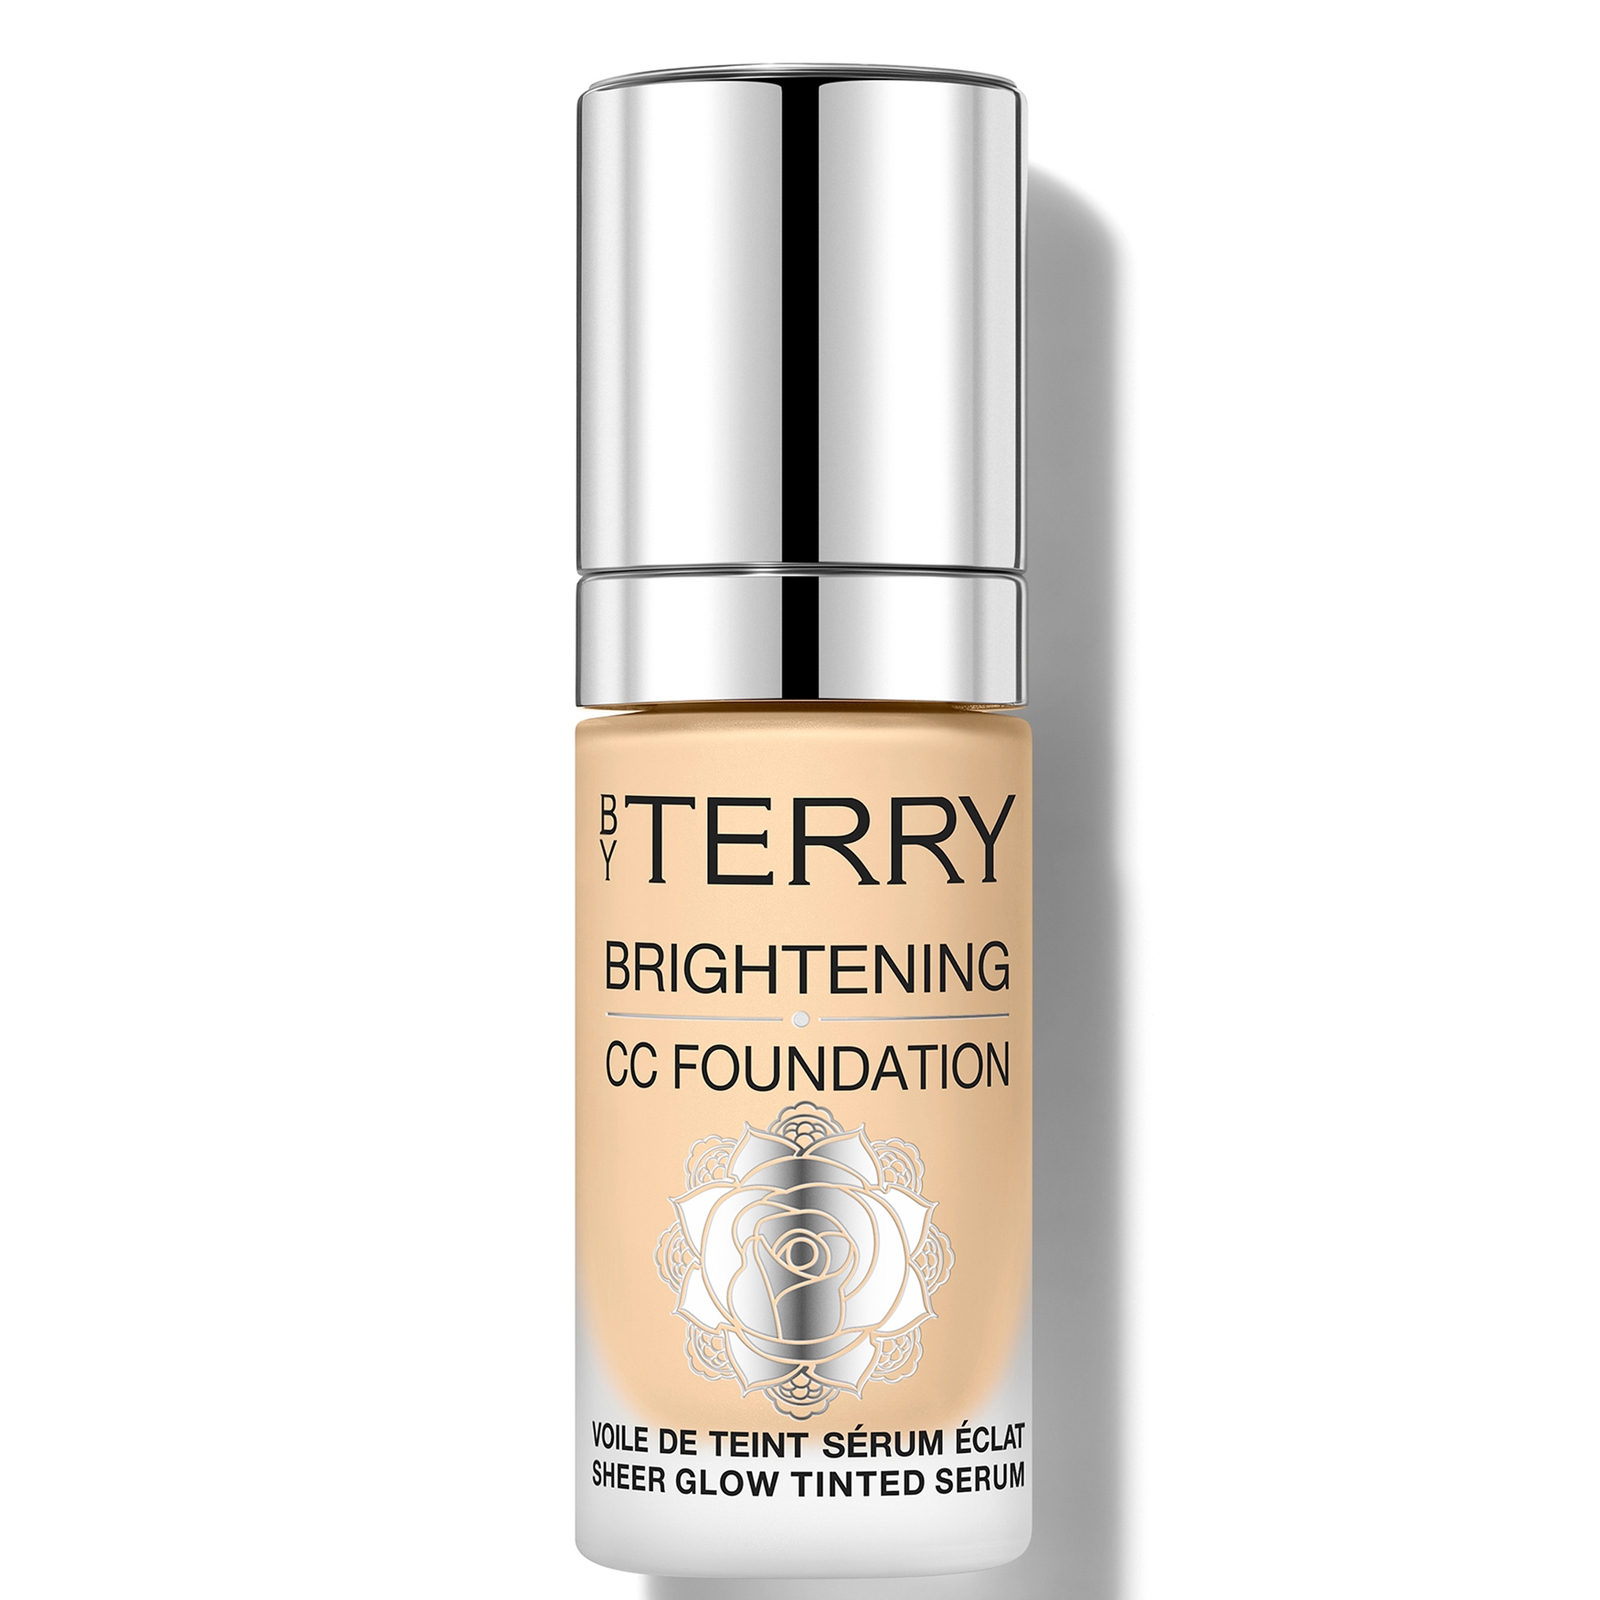 By Terry Brightening Cc Foundation 30ml (various Shades) - 3w - Medium Light Warm In Neutral